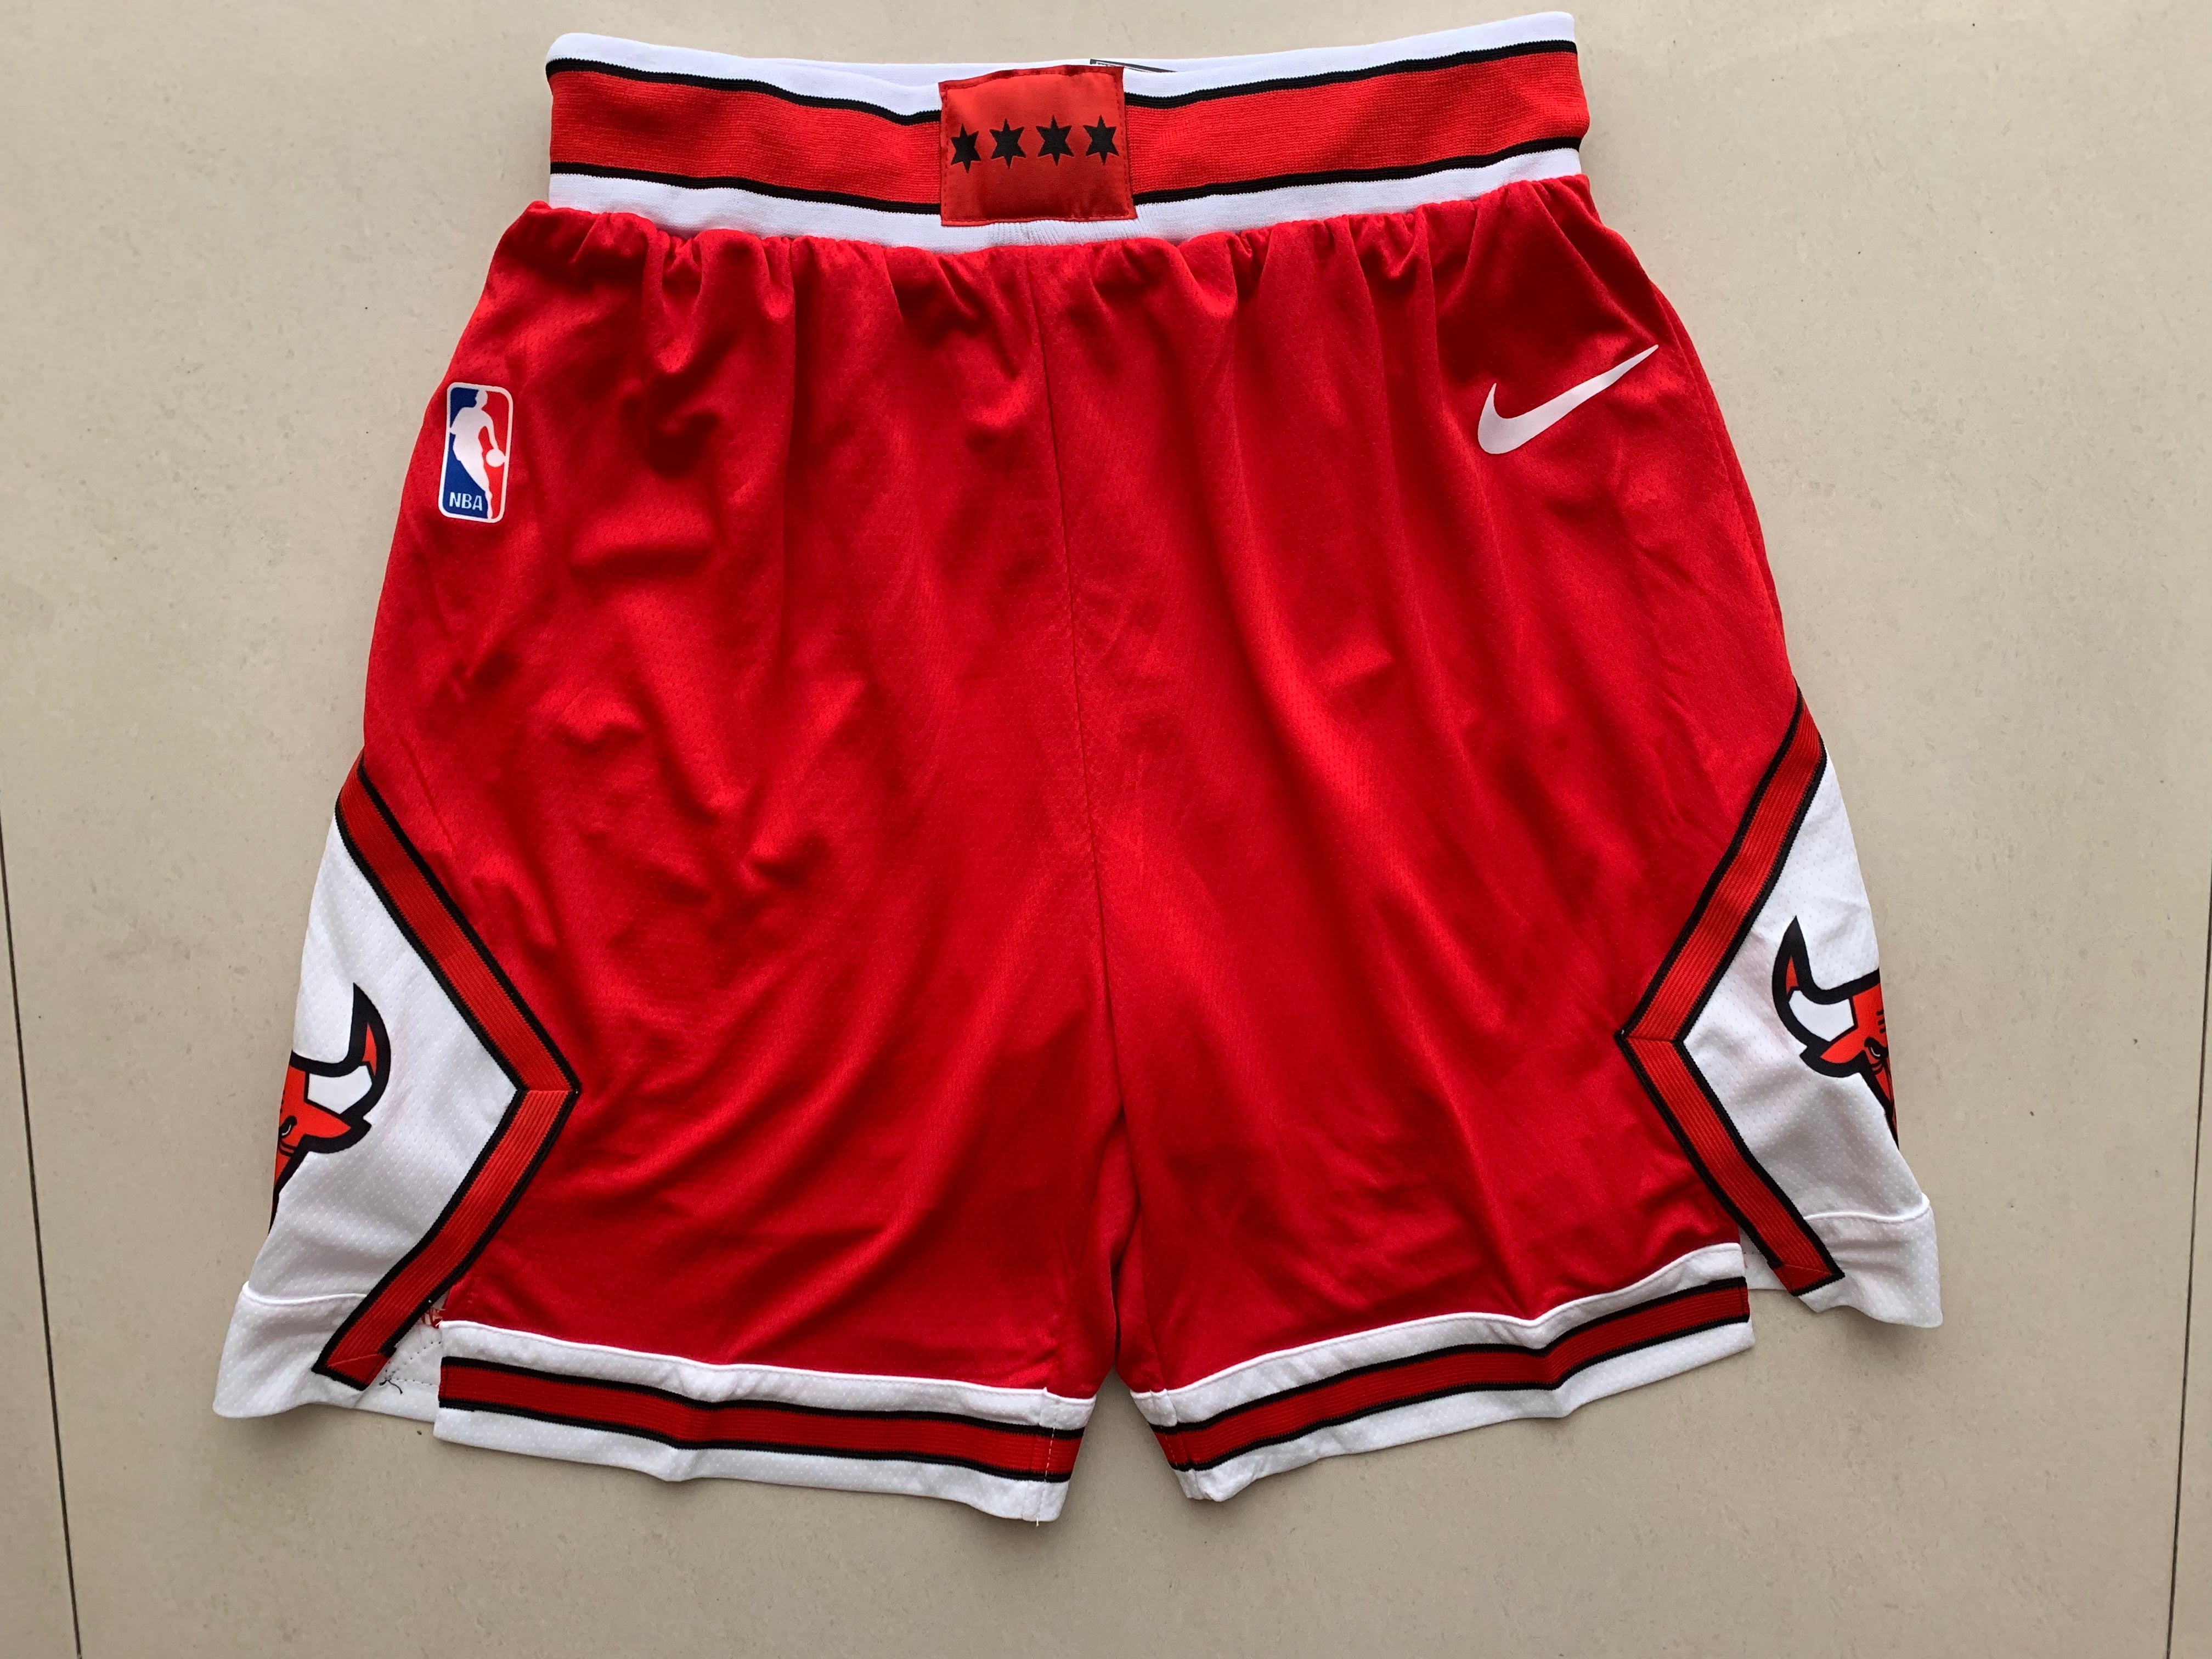 Bull red shorts